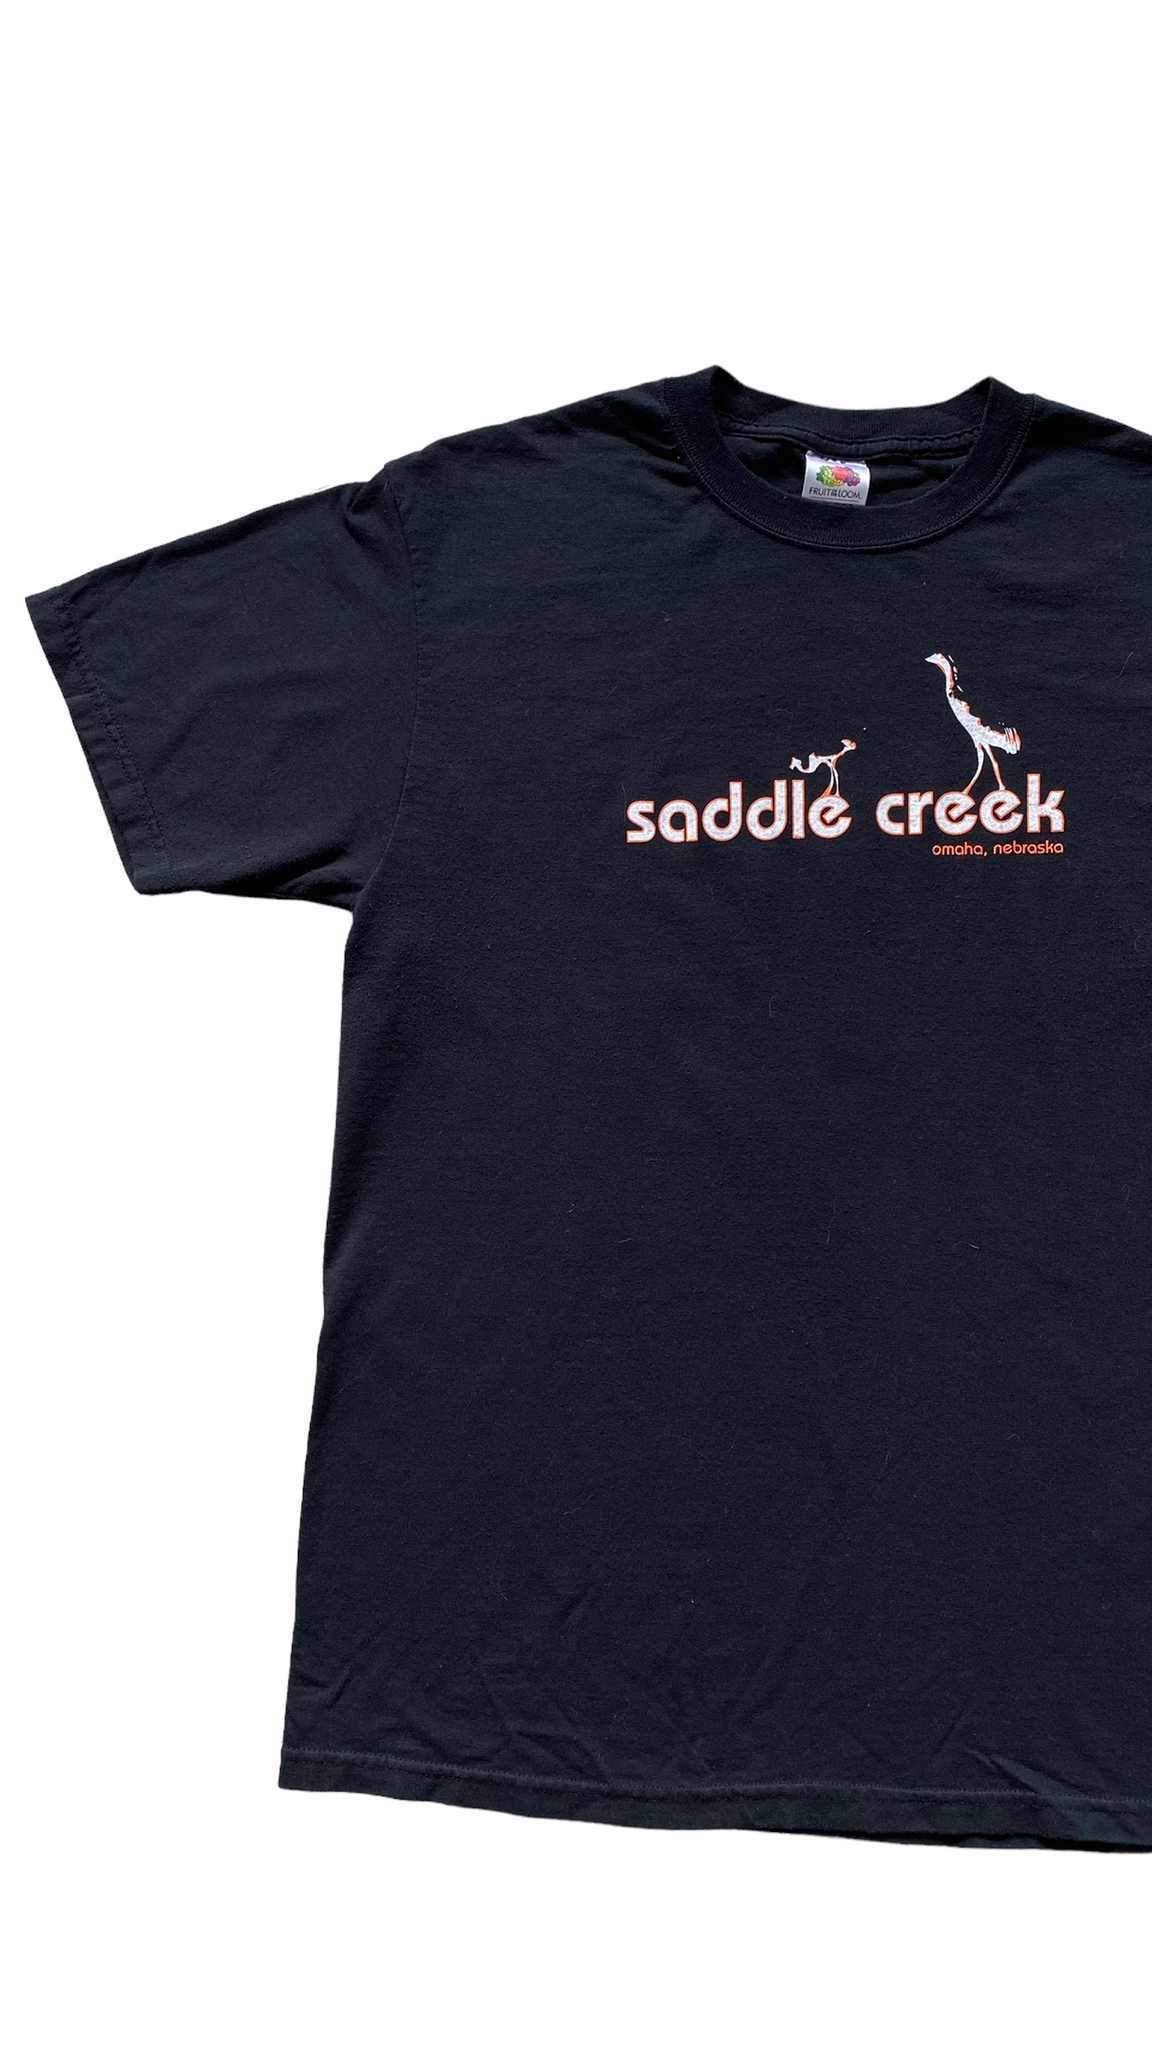 Saddle creek records tee. medium